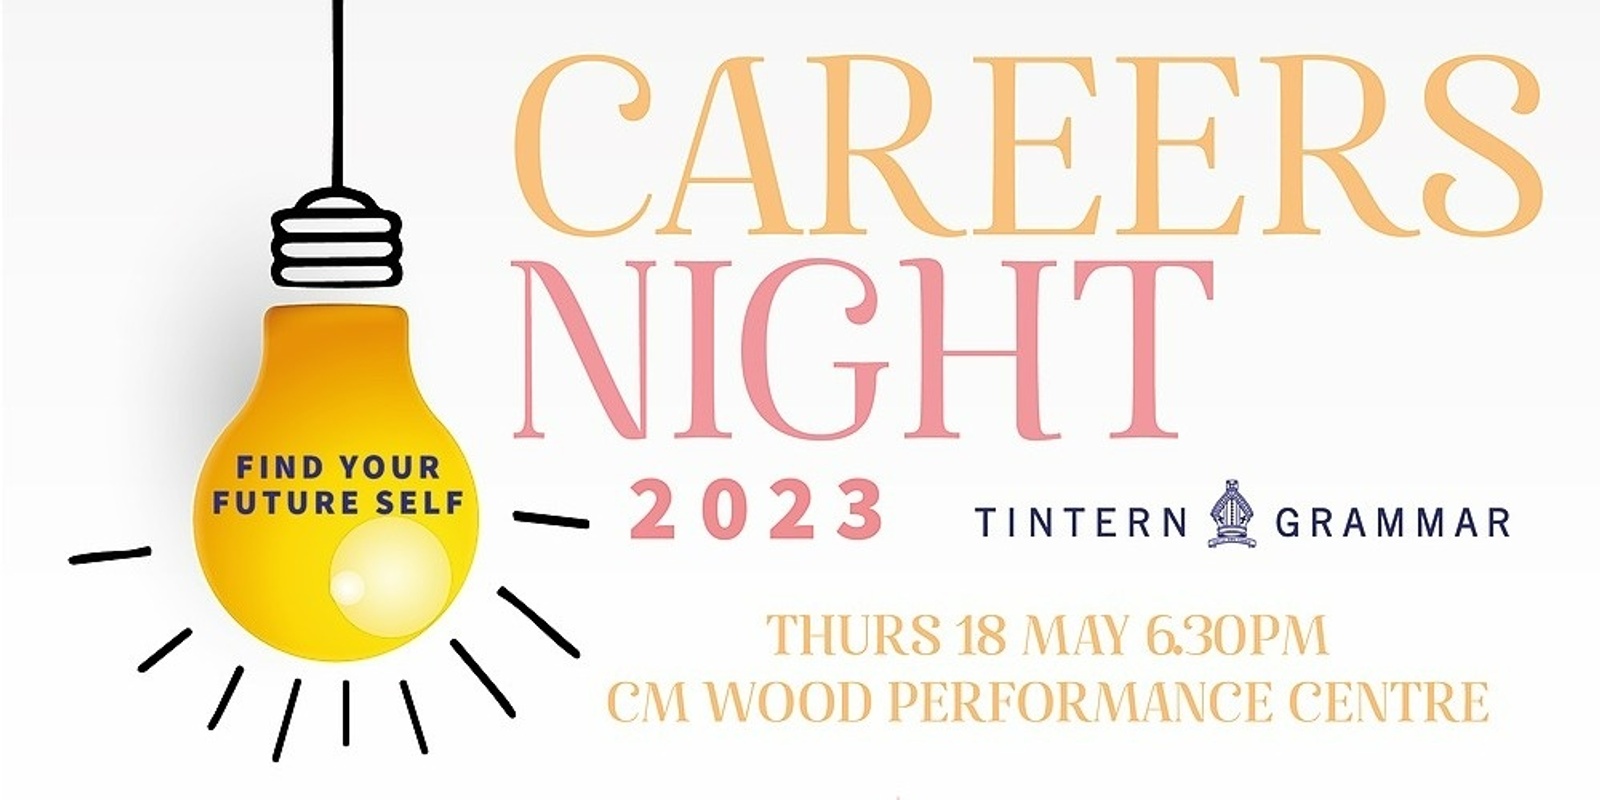 Tintern Grammar Career's Night 2023